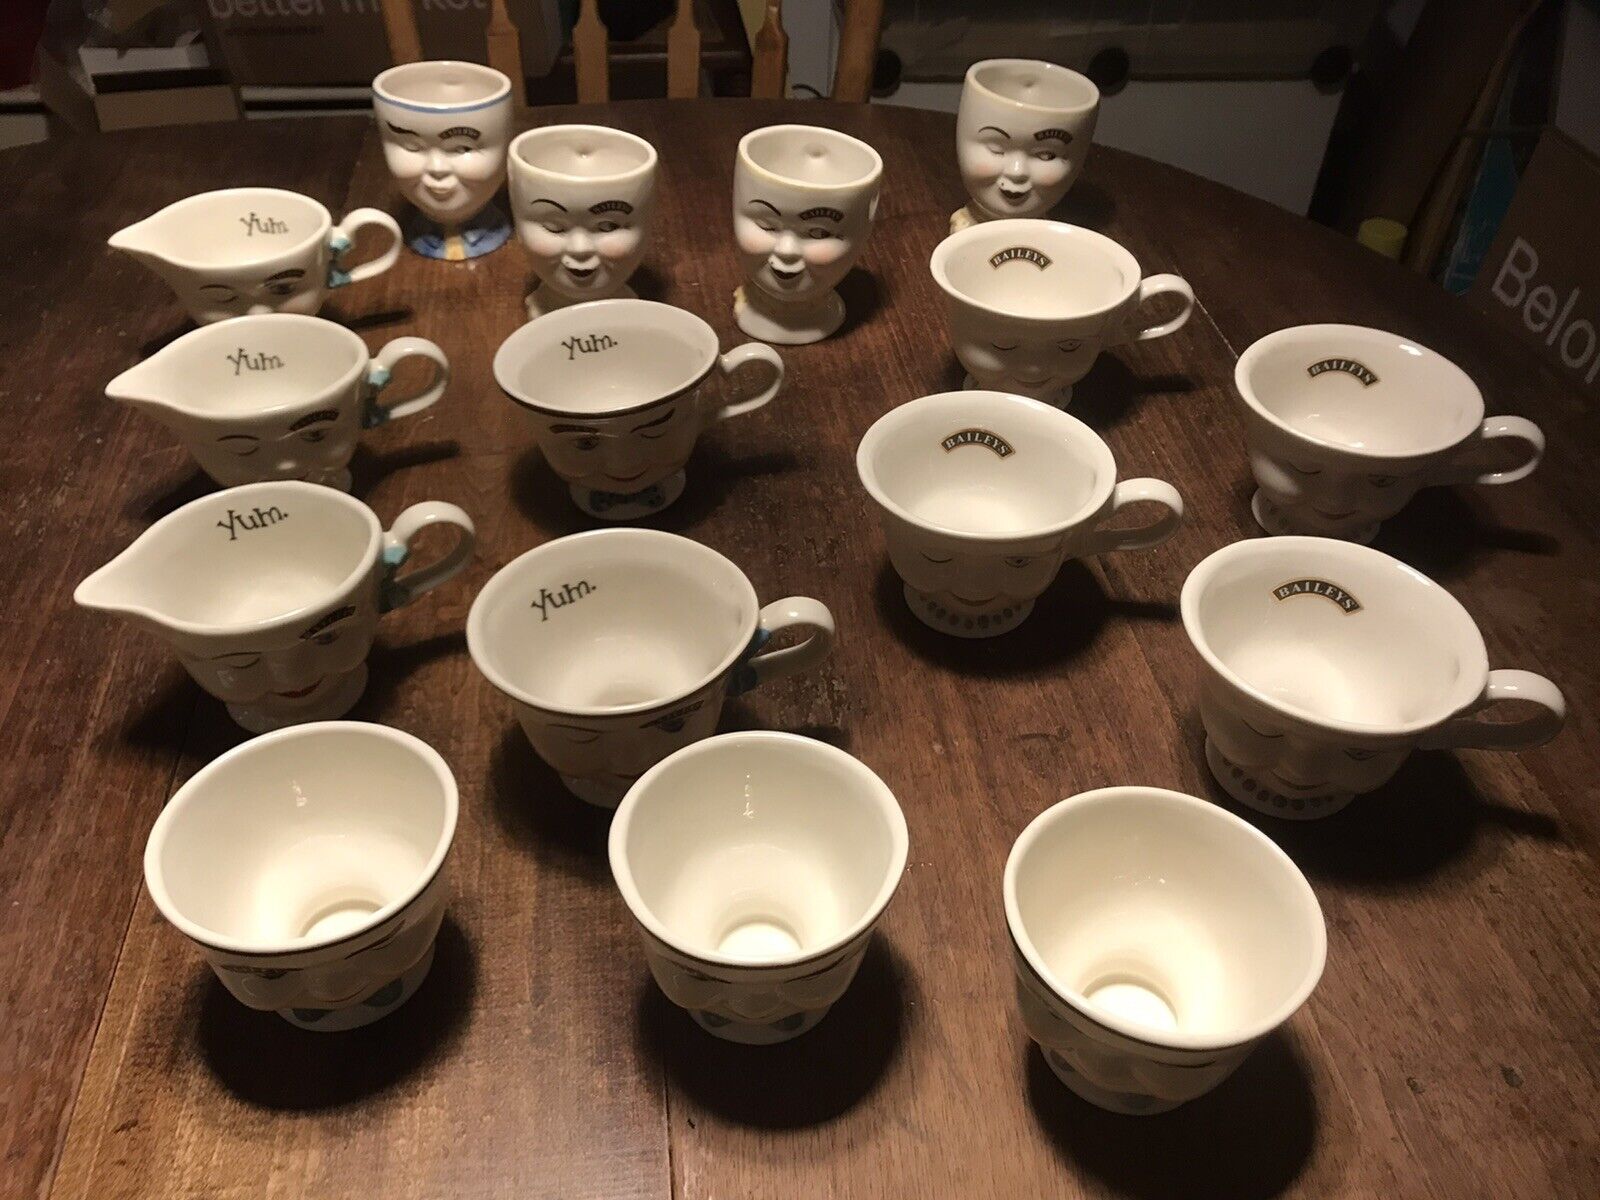 Lot 17 winking Bailey's mugs - creamers, sugar bowls, Helen Hunt, more Wyprzedaż zapasów